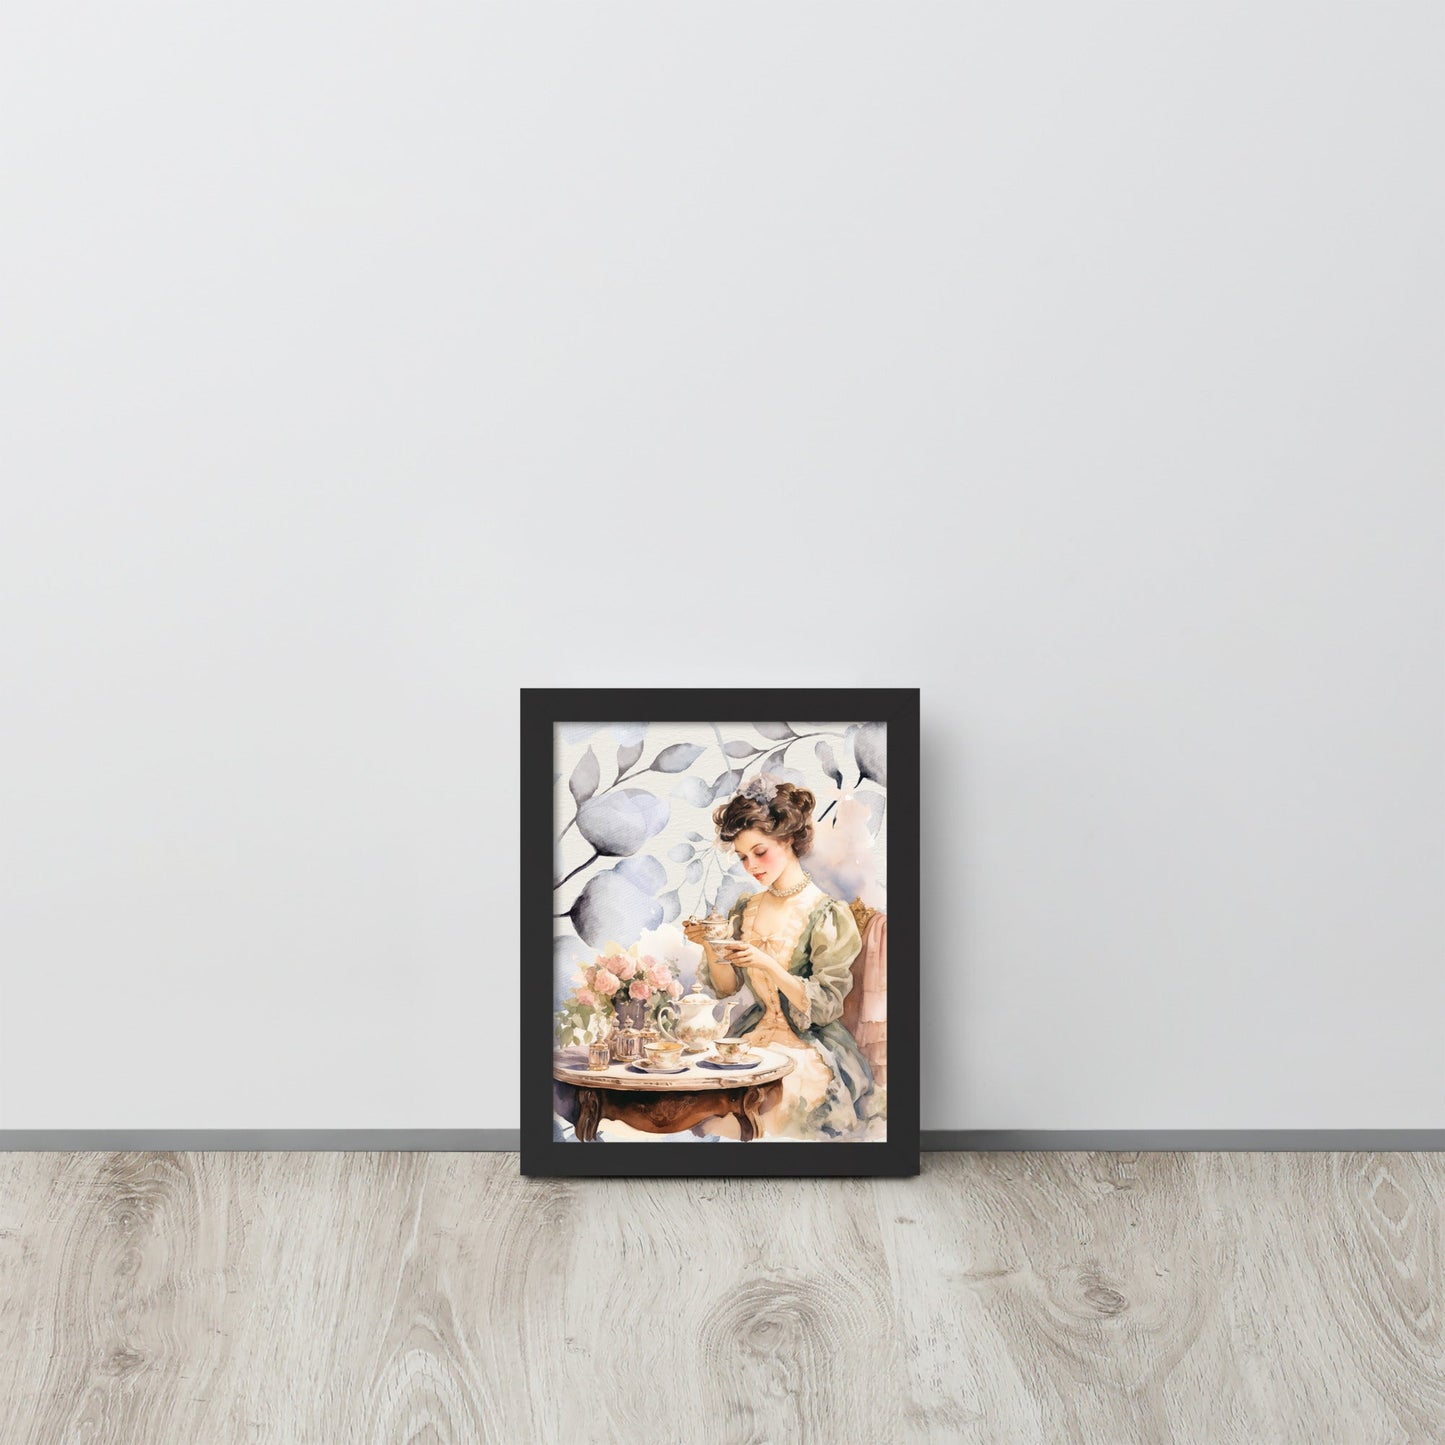 Framed photo paper poster - Cultured Bakehouse